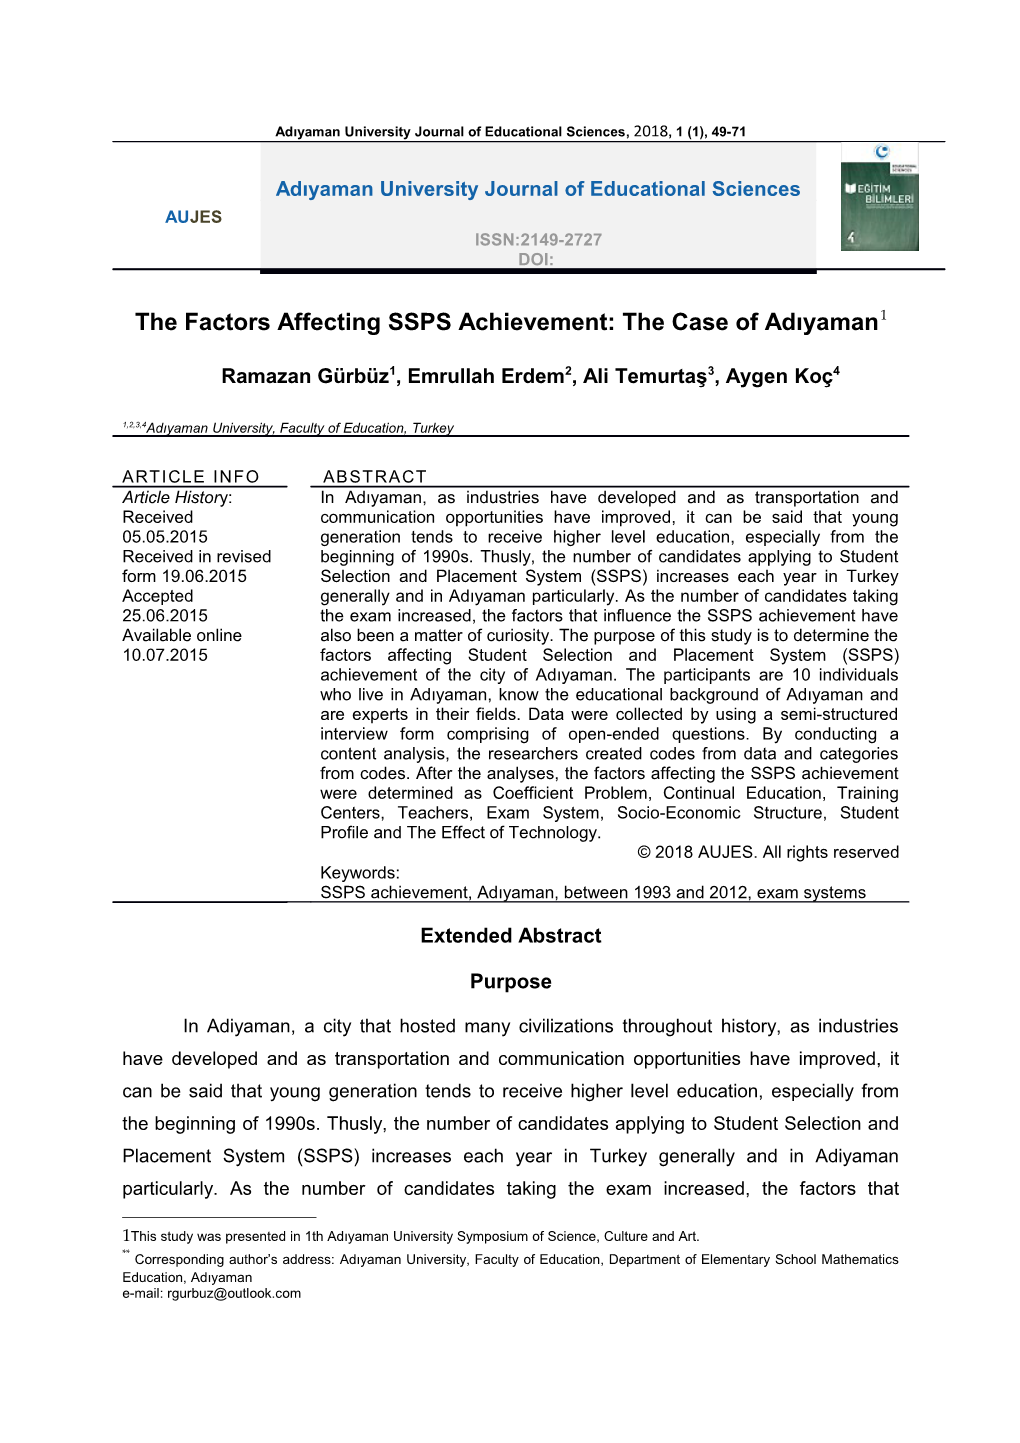 Adıyaman University Journal of Educational Sciences, 2015,5 (1), 49-71